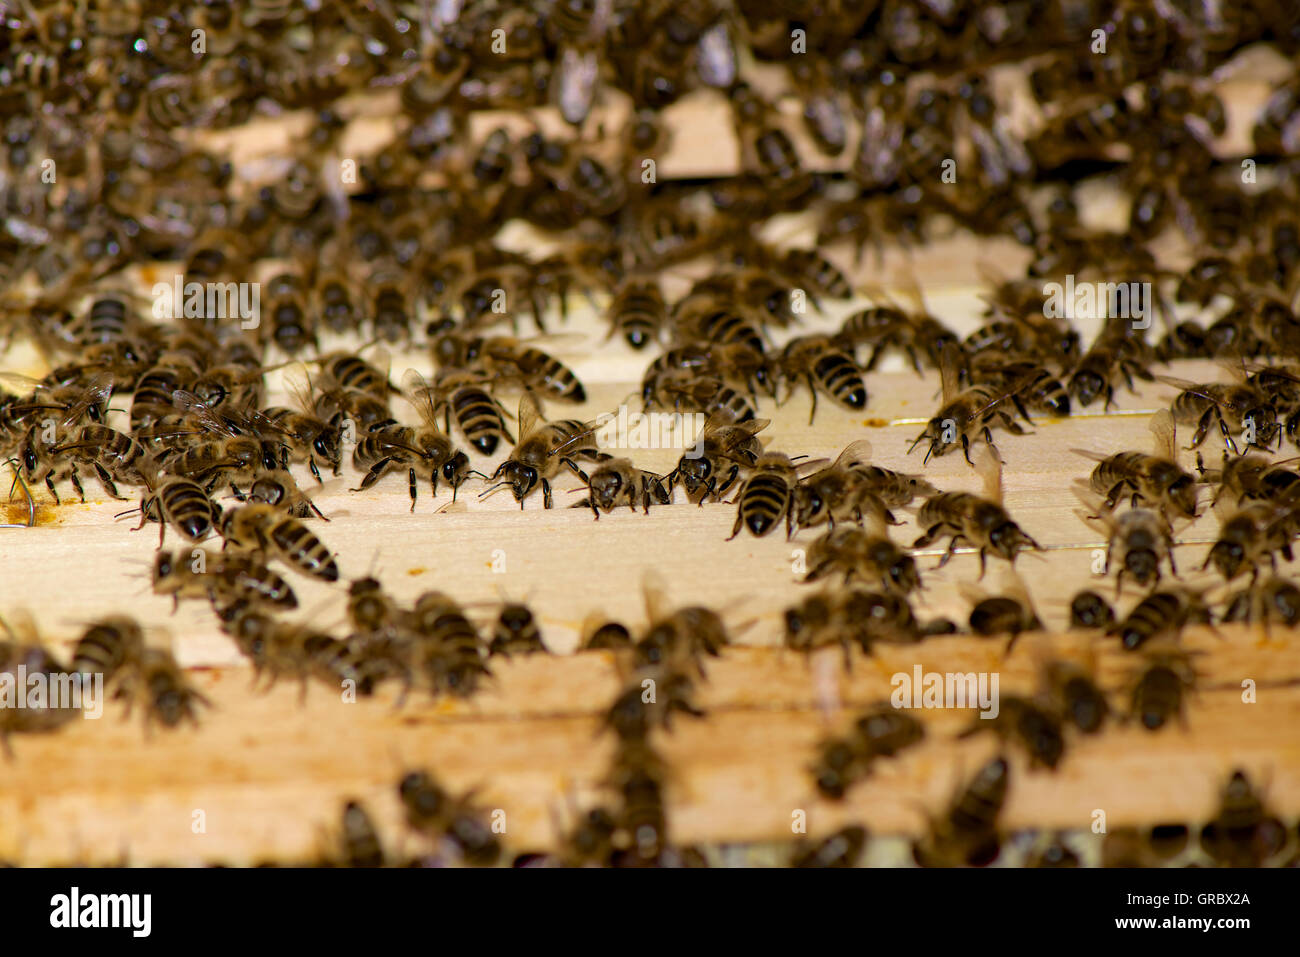 En panal de abejas bulliciosa fotogramas Foto de stock